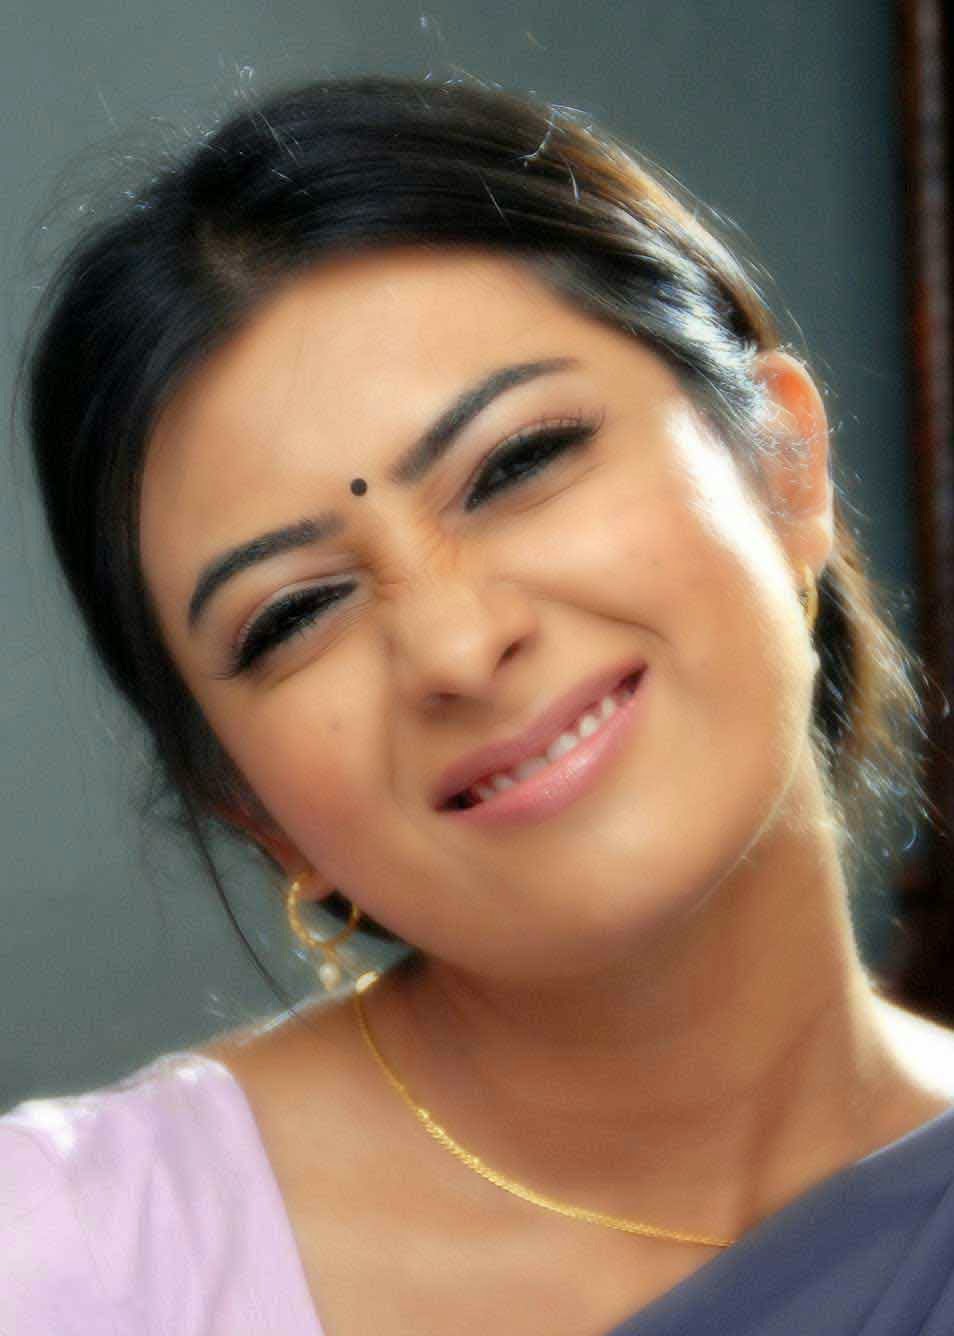 Movie Image Gallery: Radhika Pandit Actress Latest Image Gallery